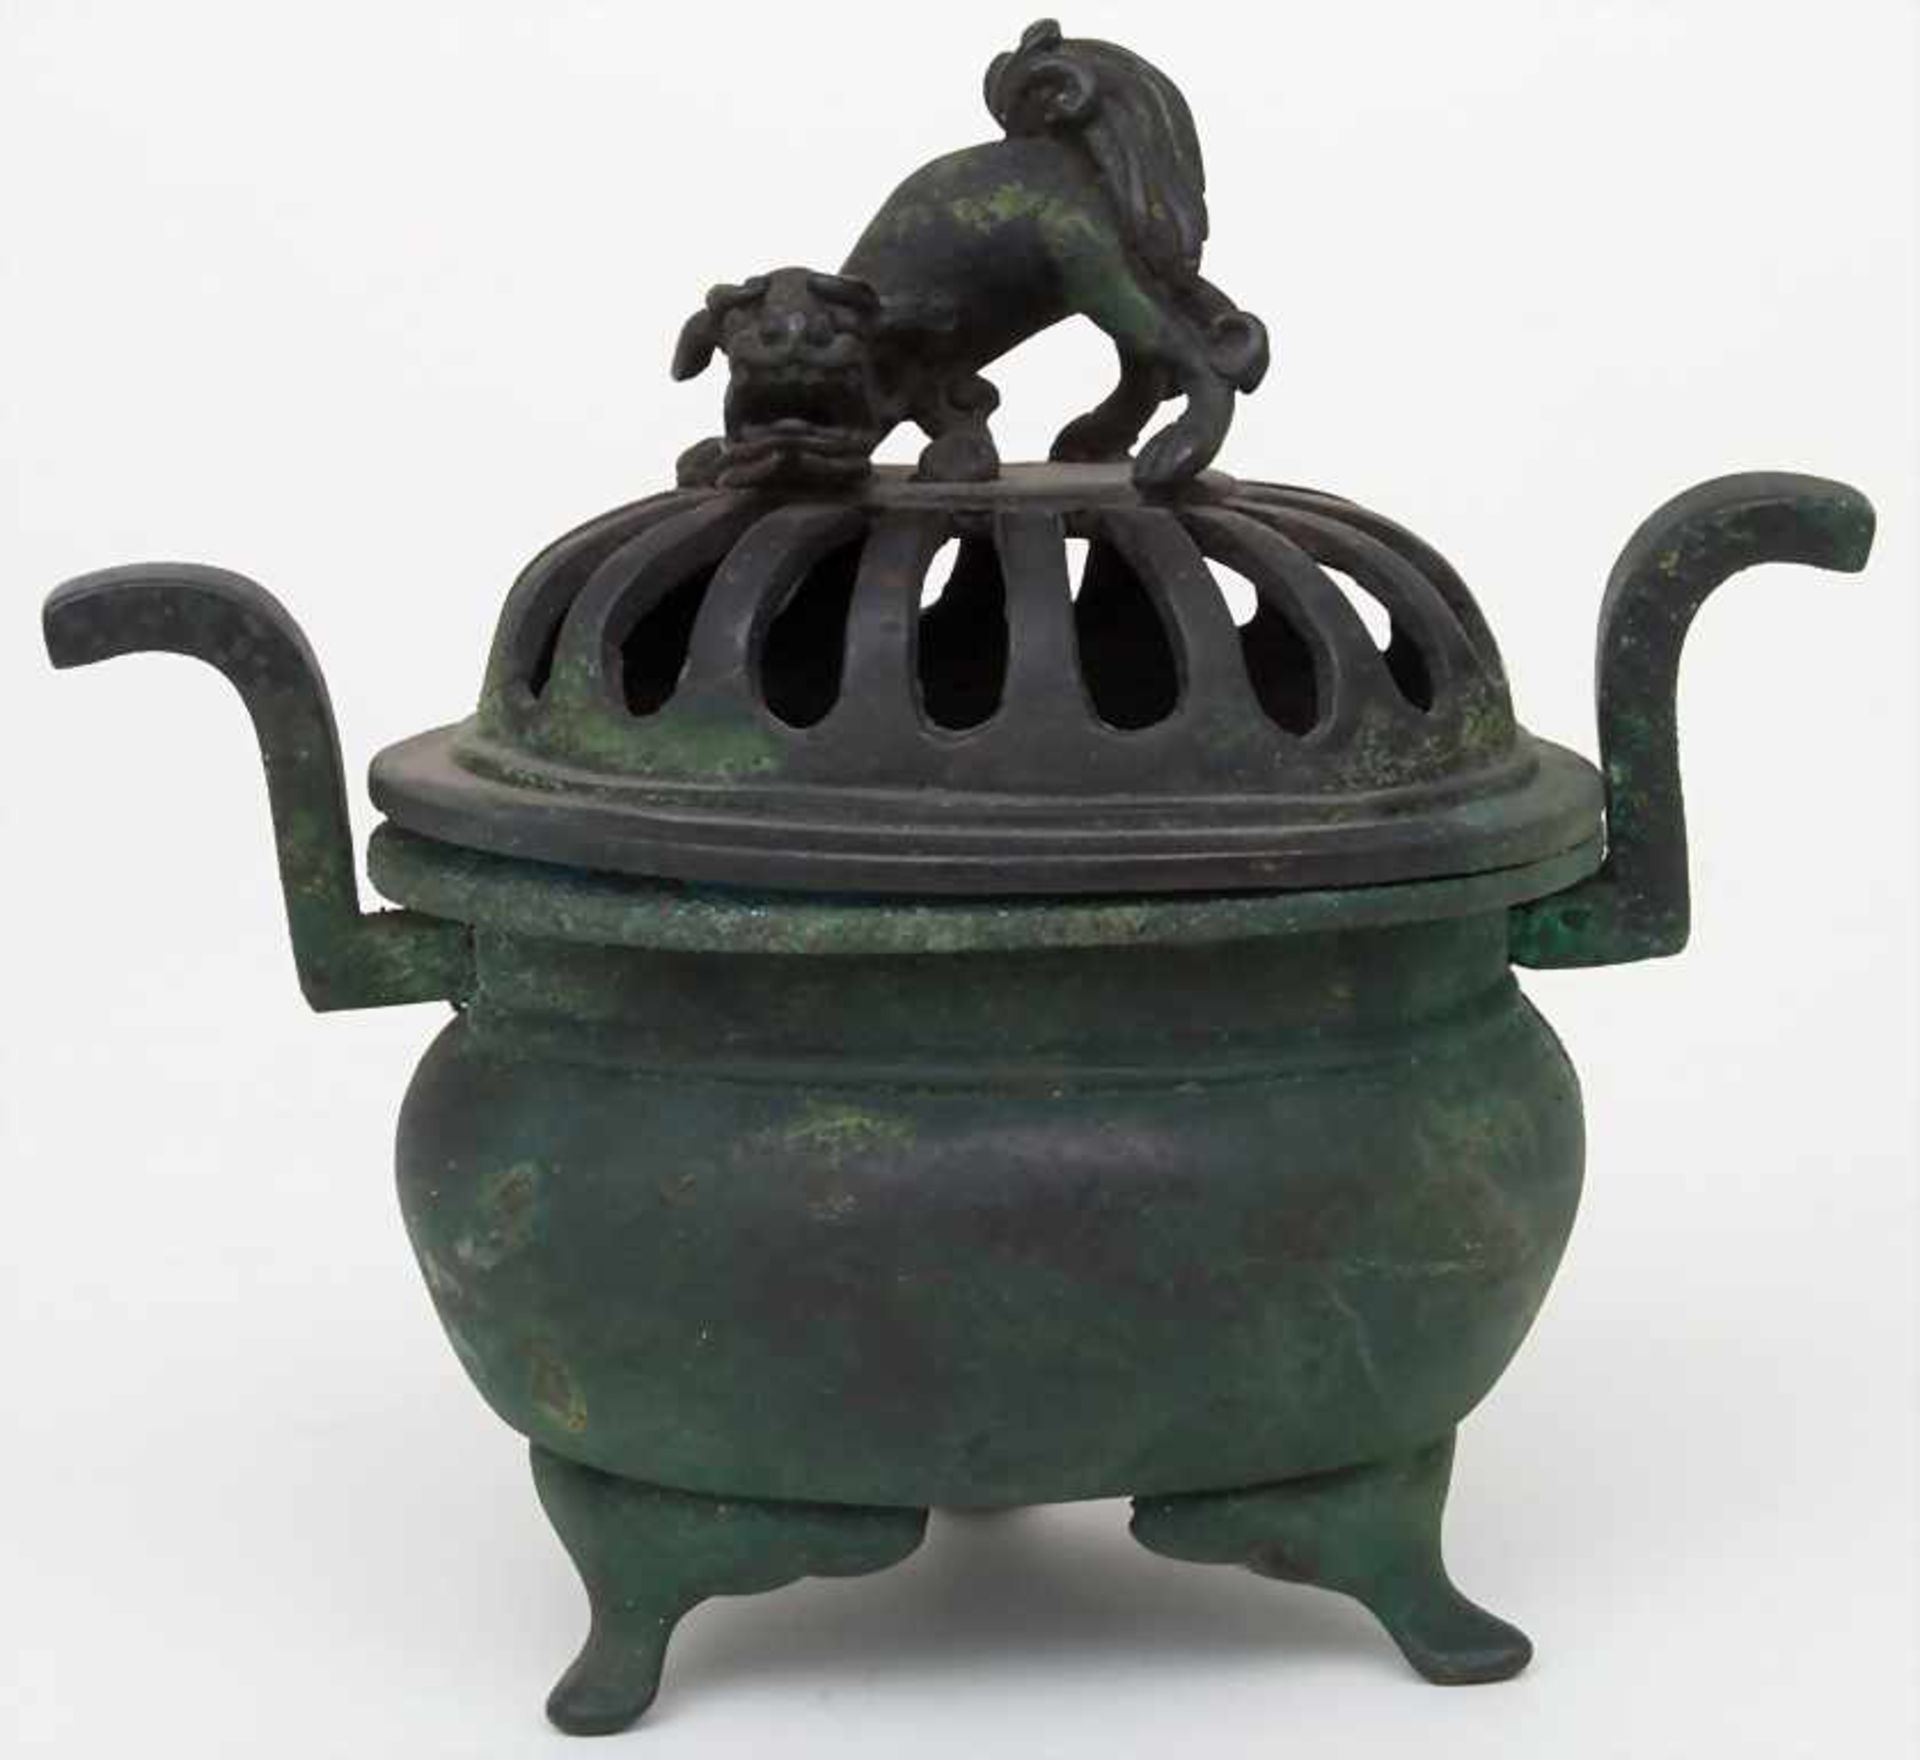 Weihrauchbrenner mit Shishi-Figur / An incense burner with shishi-fgure, ChinaMaterial: